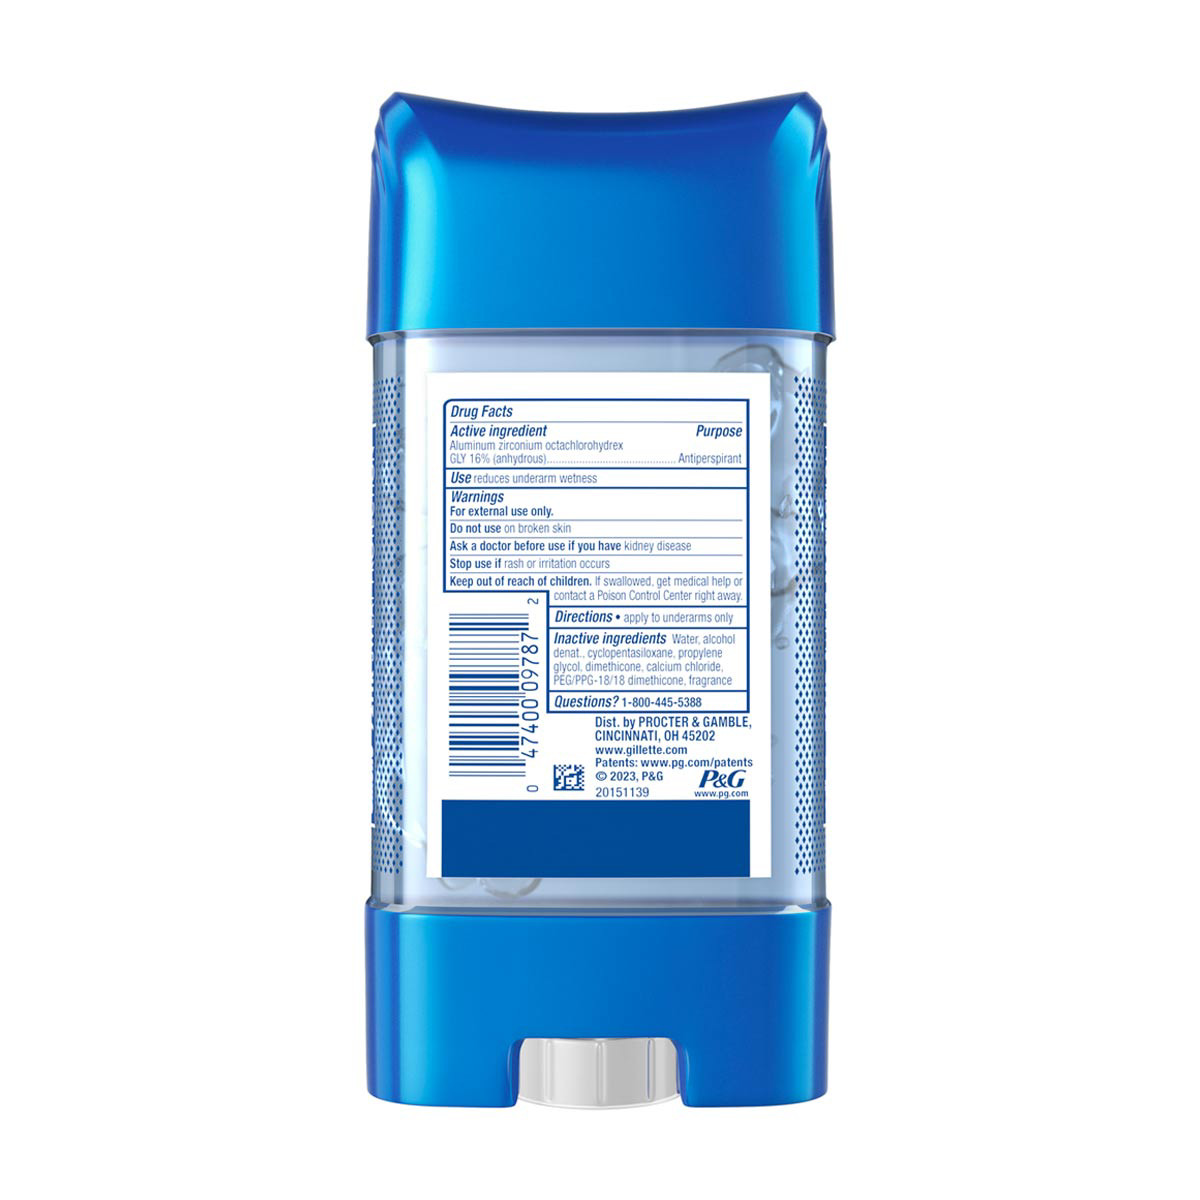 Gillette Clearshield Clear Gel Antiperspirant & Deodorant Stick, Power Rush